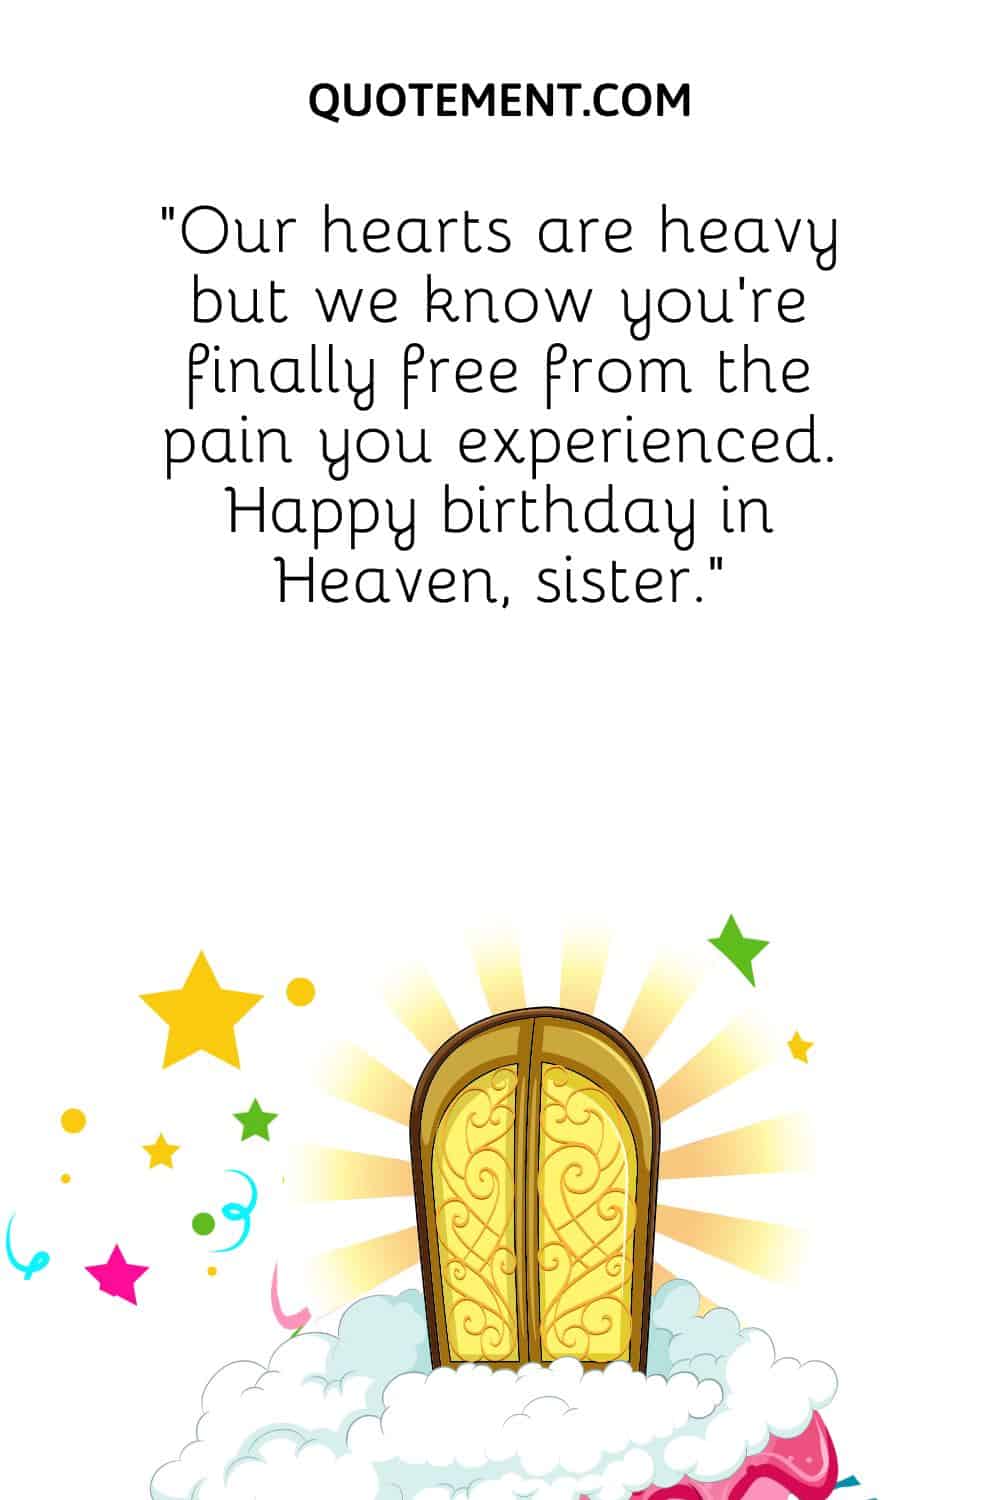 Happy birthday in Heaven, sister